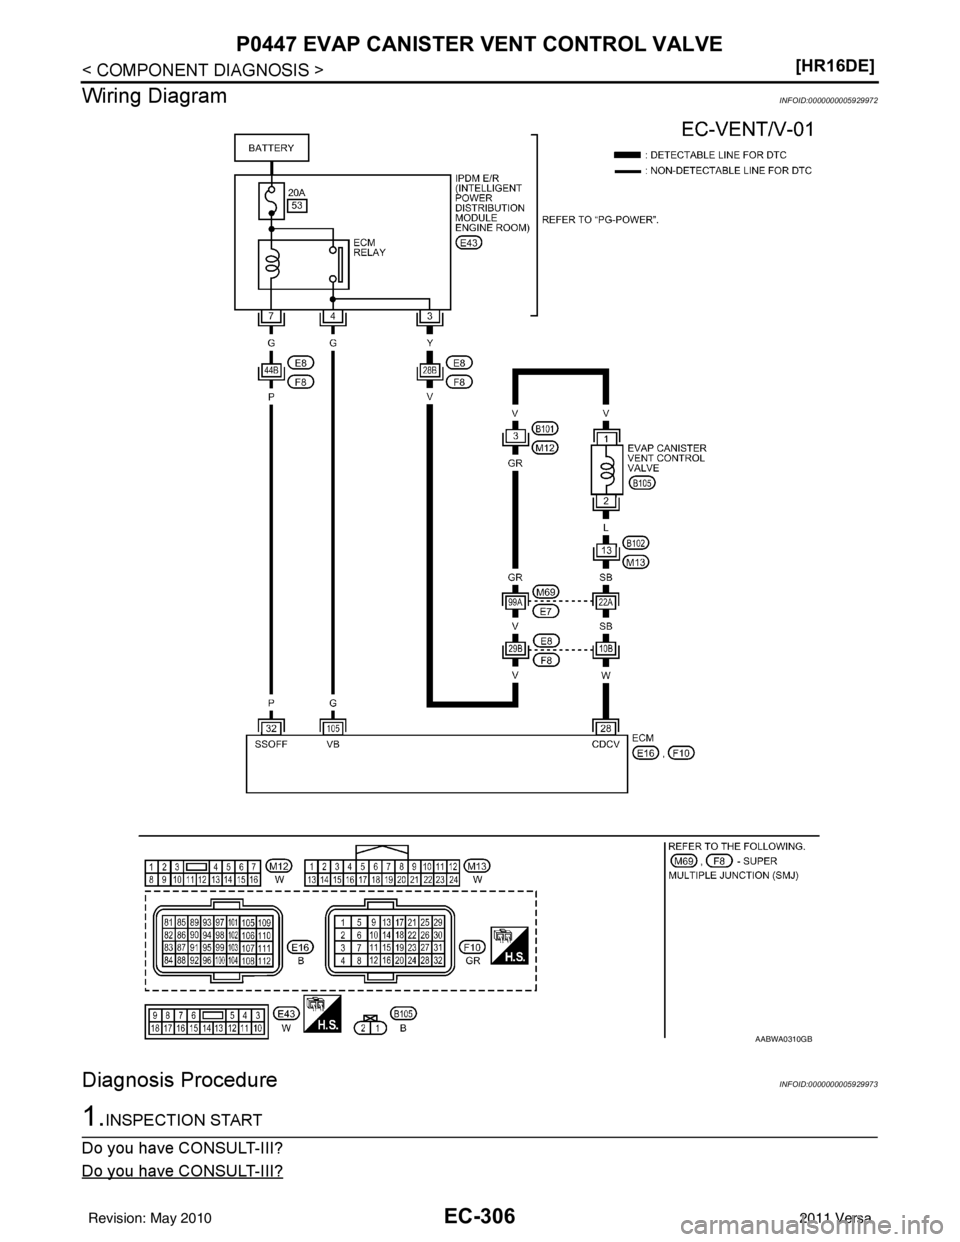 NISSAN LATIO 2011  Service Repair Manual EC-306
< COMPONENT DIAGNOSIS >[HR16DE]
P0447 EVAP CANISTER VENT CONTROL VALVE
Wiring Diagram
INFOID:0000000005929972
Diagnosis ProcedureINFOID:0000000005929973
1.INSPECTION START
Do you have CONSULT-I